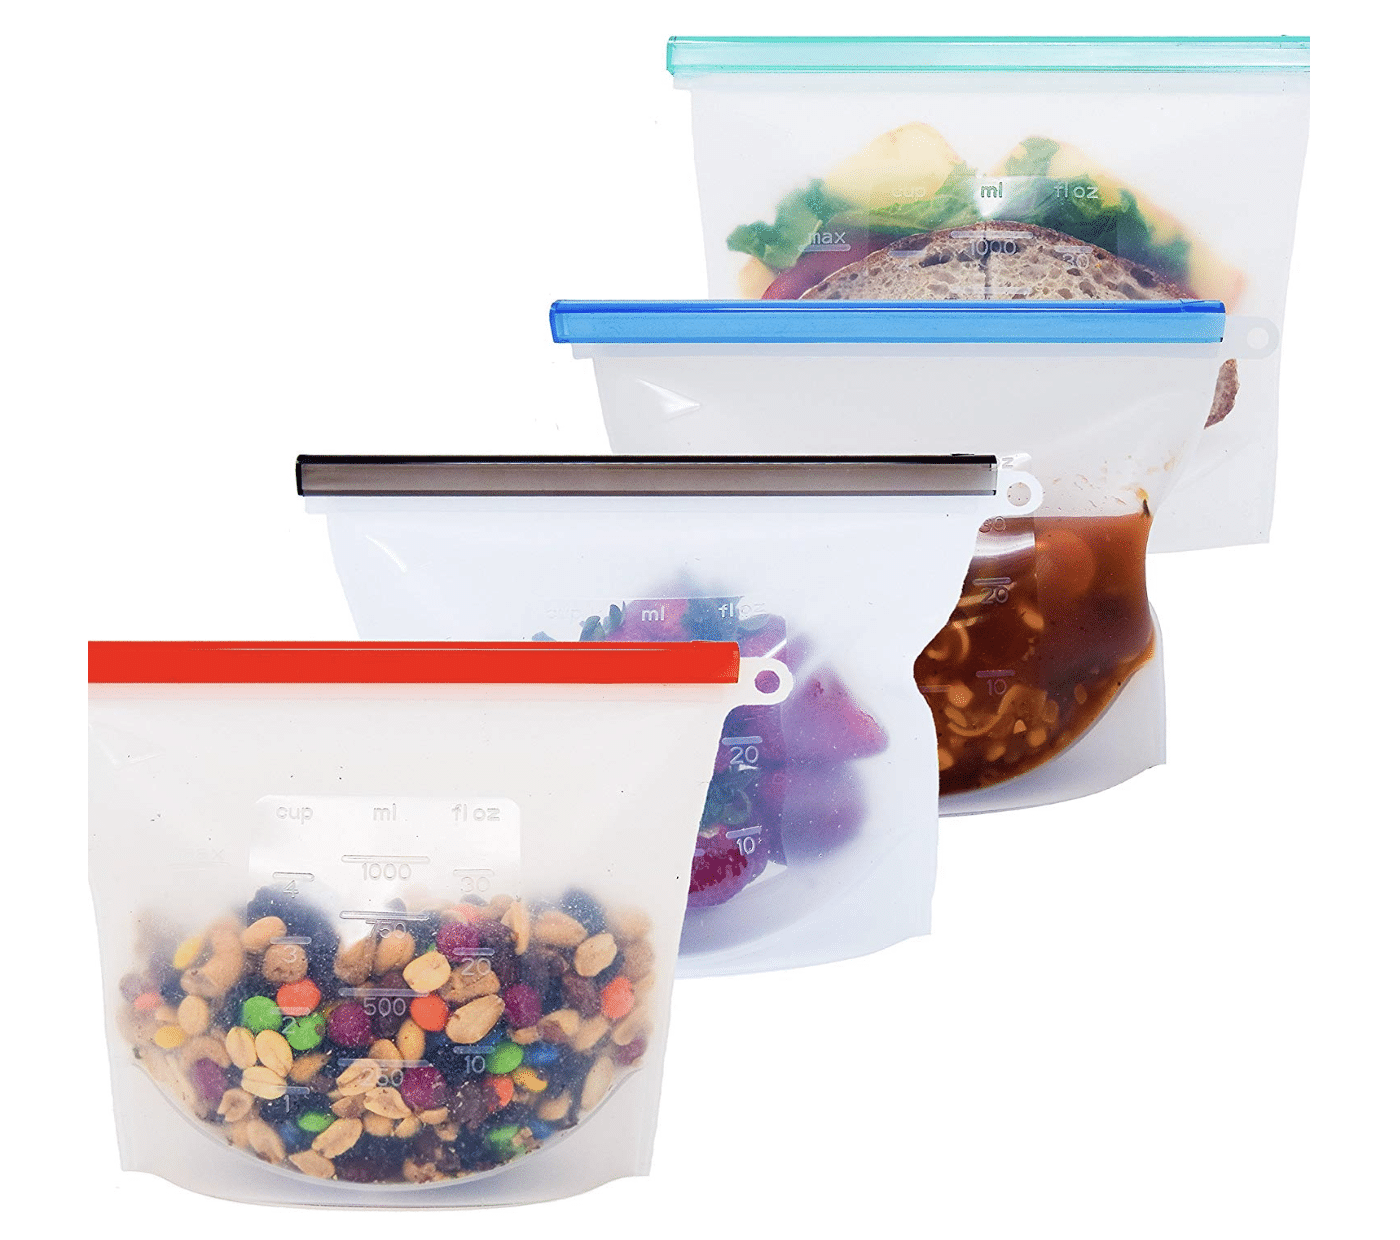 Snacks in reusable baggies